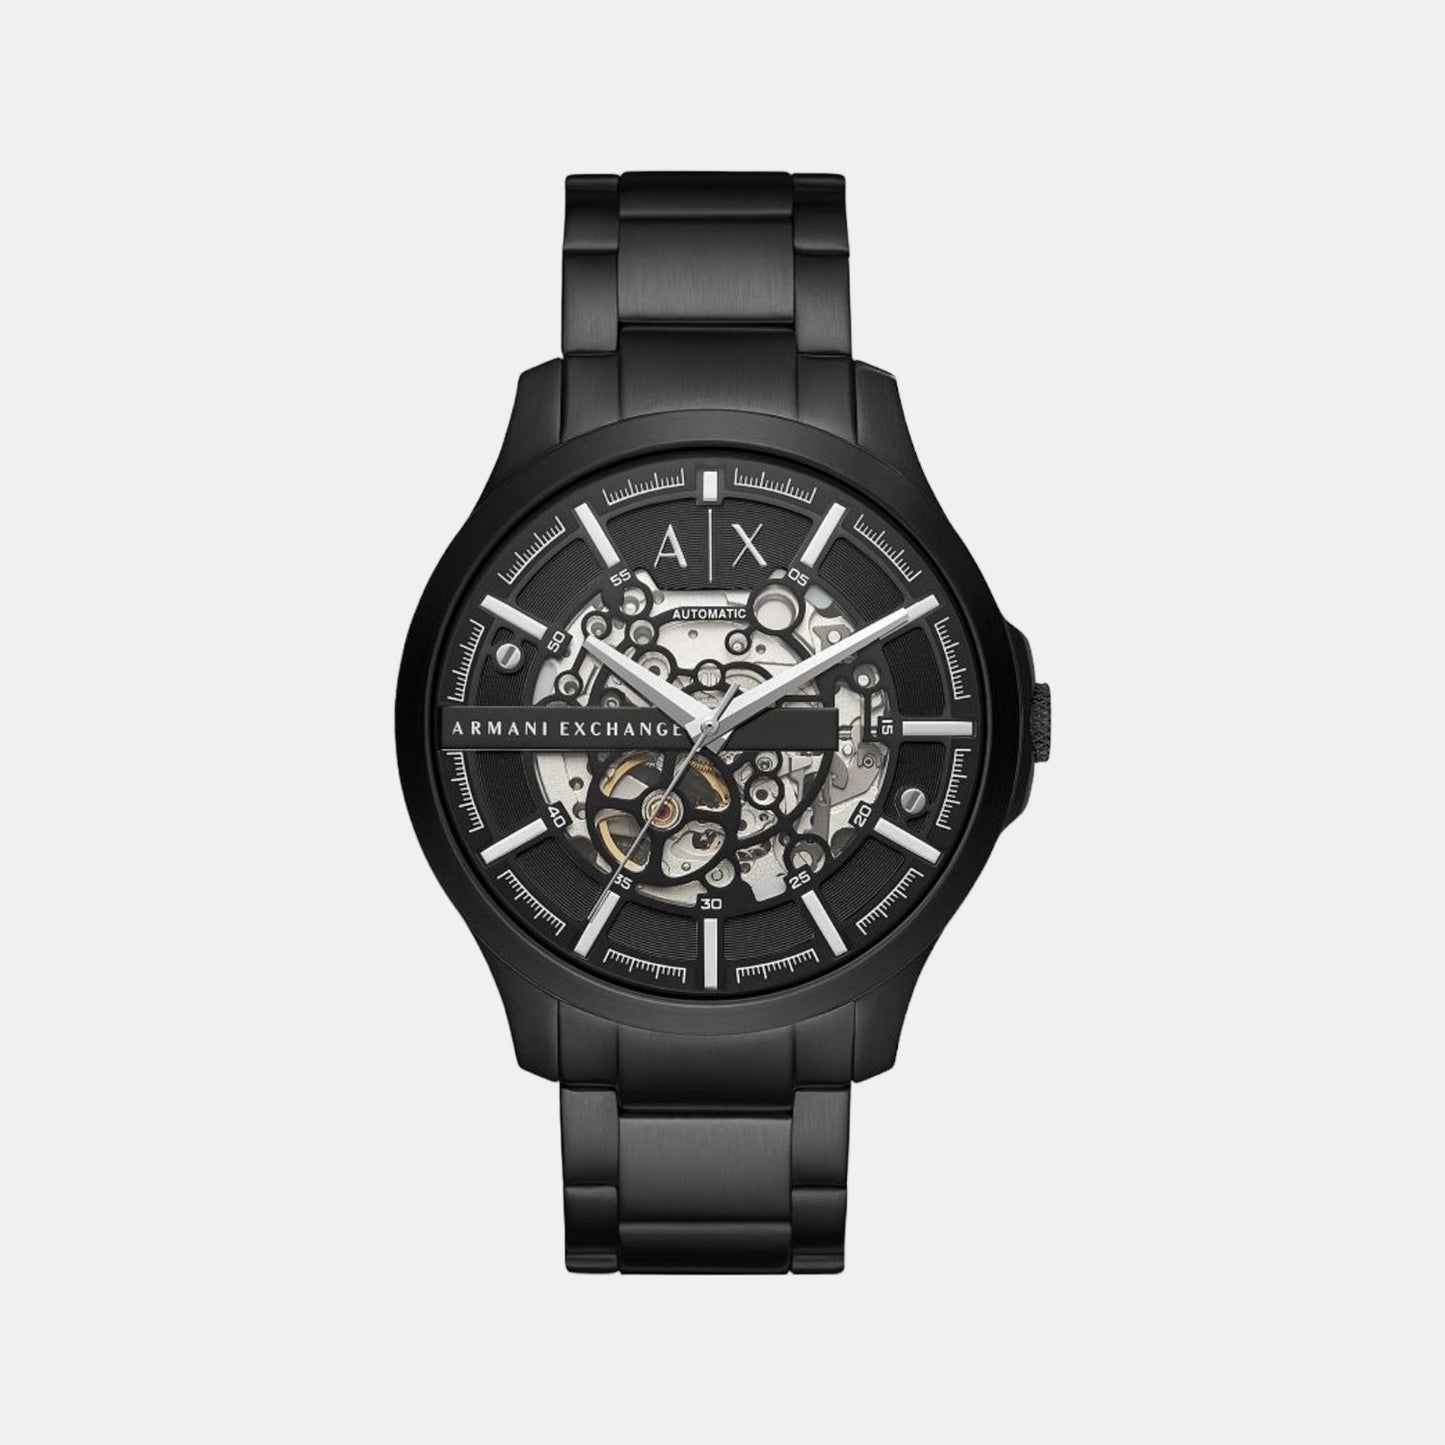 armani-exchange-black-analog-men-watch-ax2418